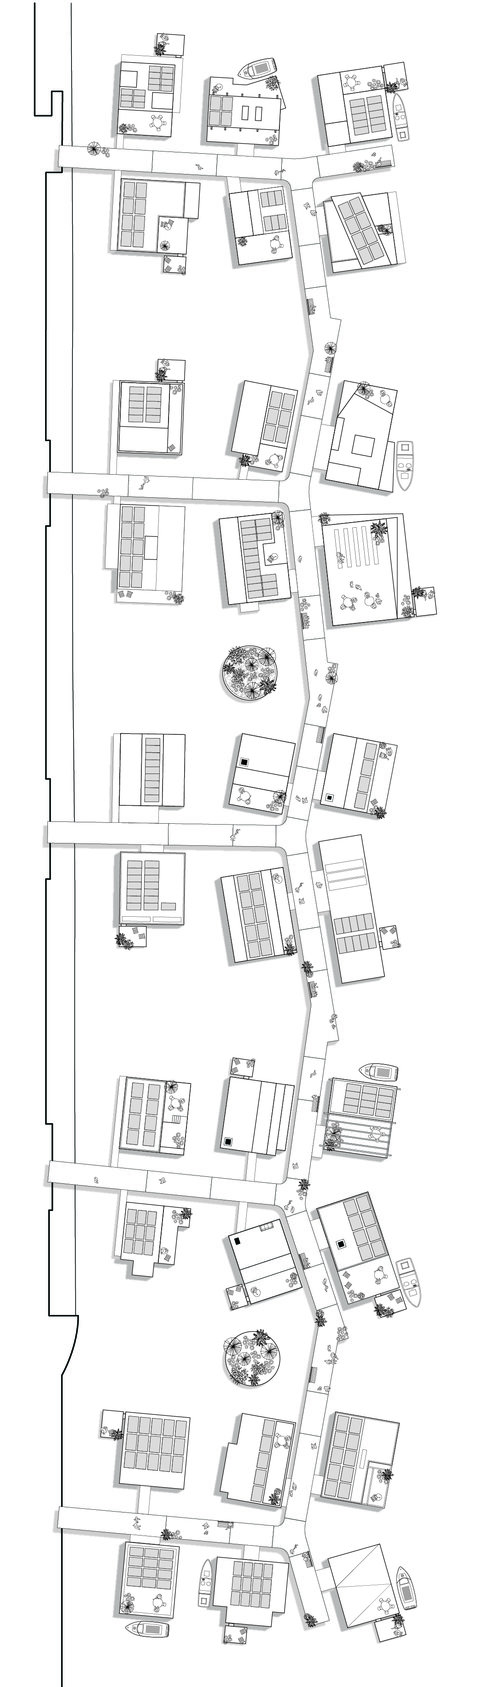 An overhead layout for Amsterdam's new Schoonschip floating neighborhood. 